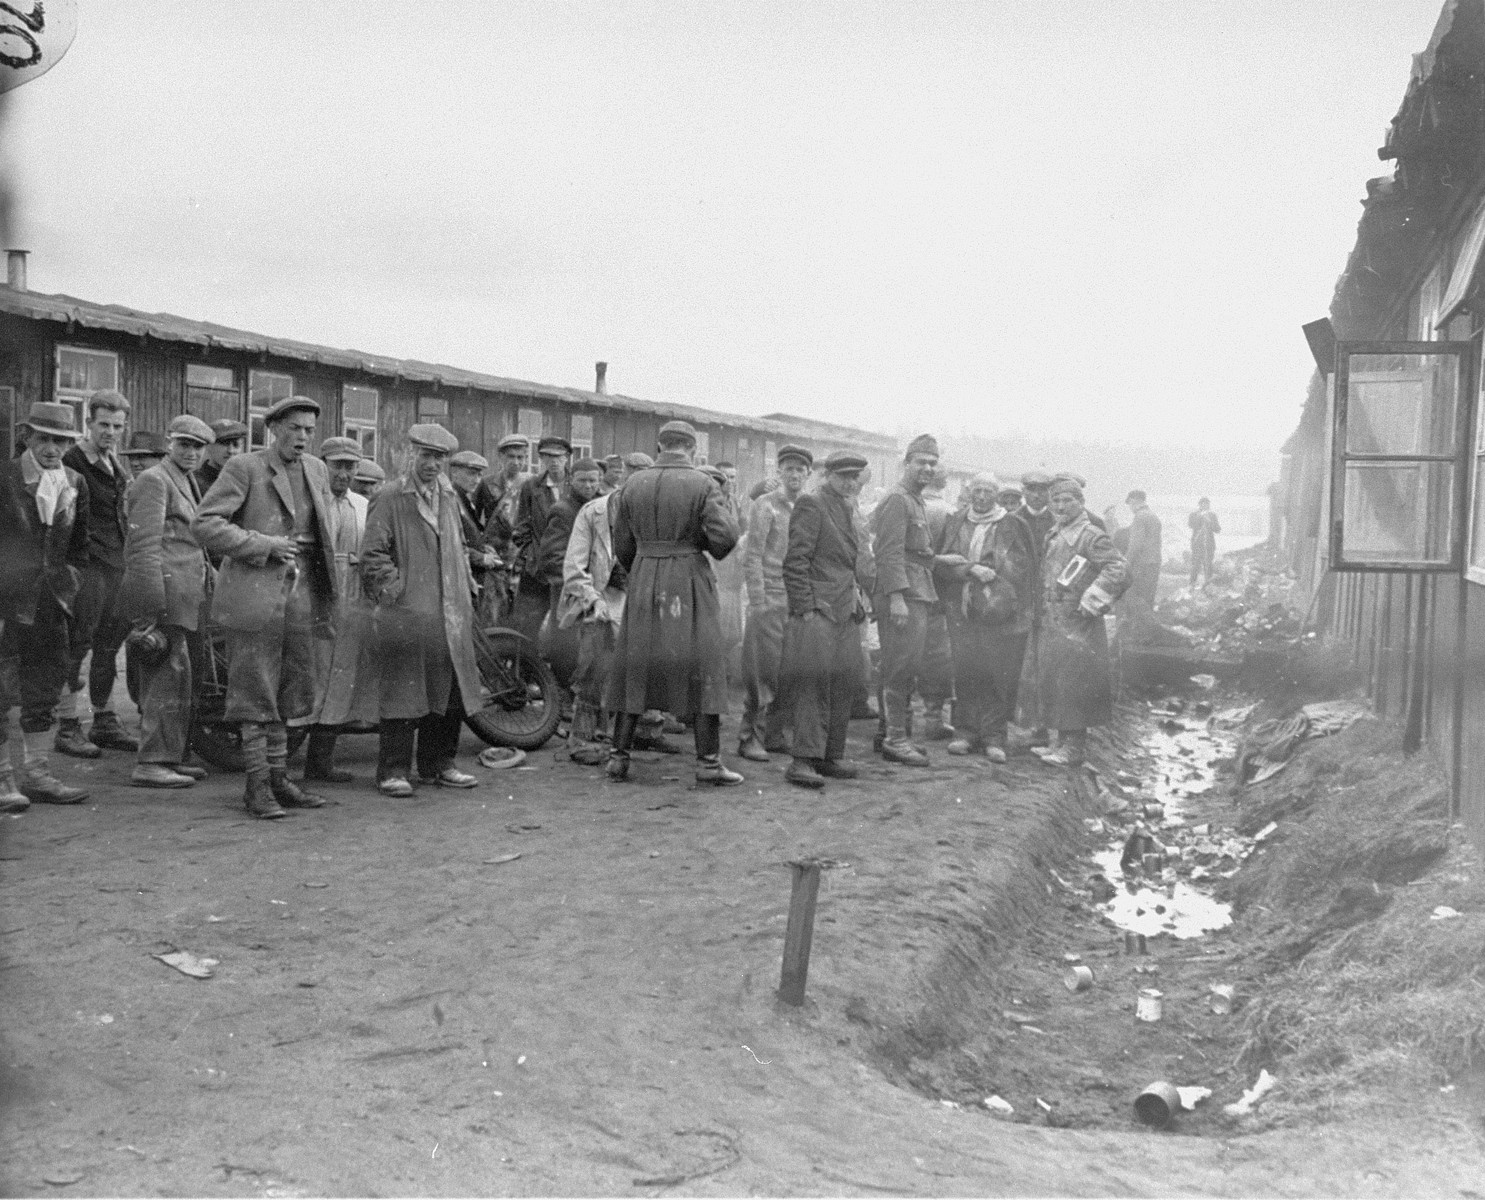 Unidentified soldiers dusting survivors in Bergen Belsen with DDT powder to halt the spread of Typhus.